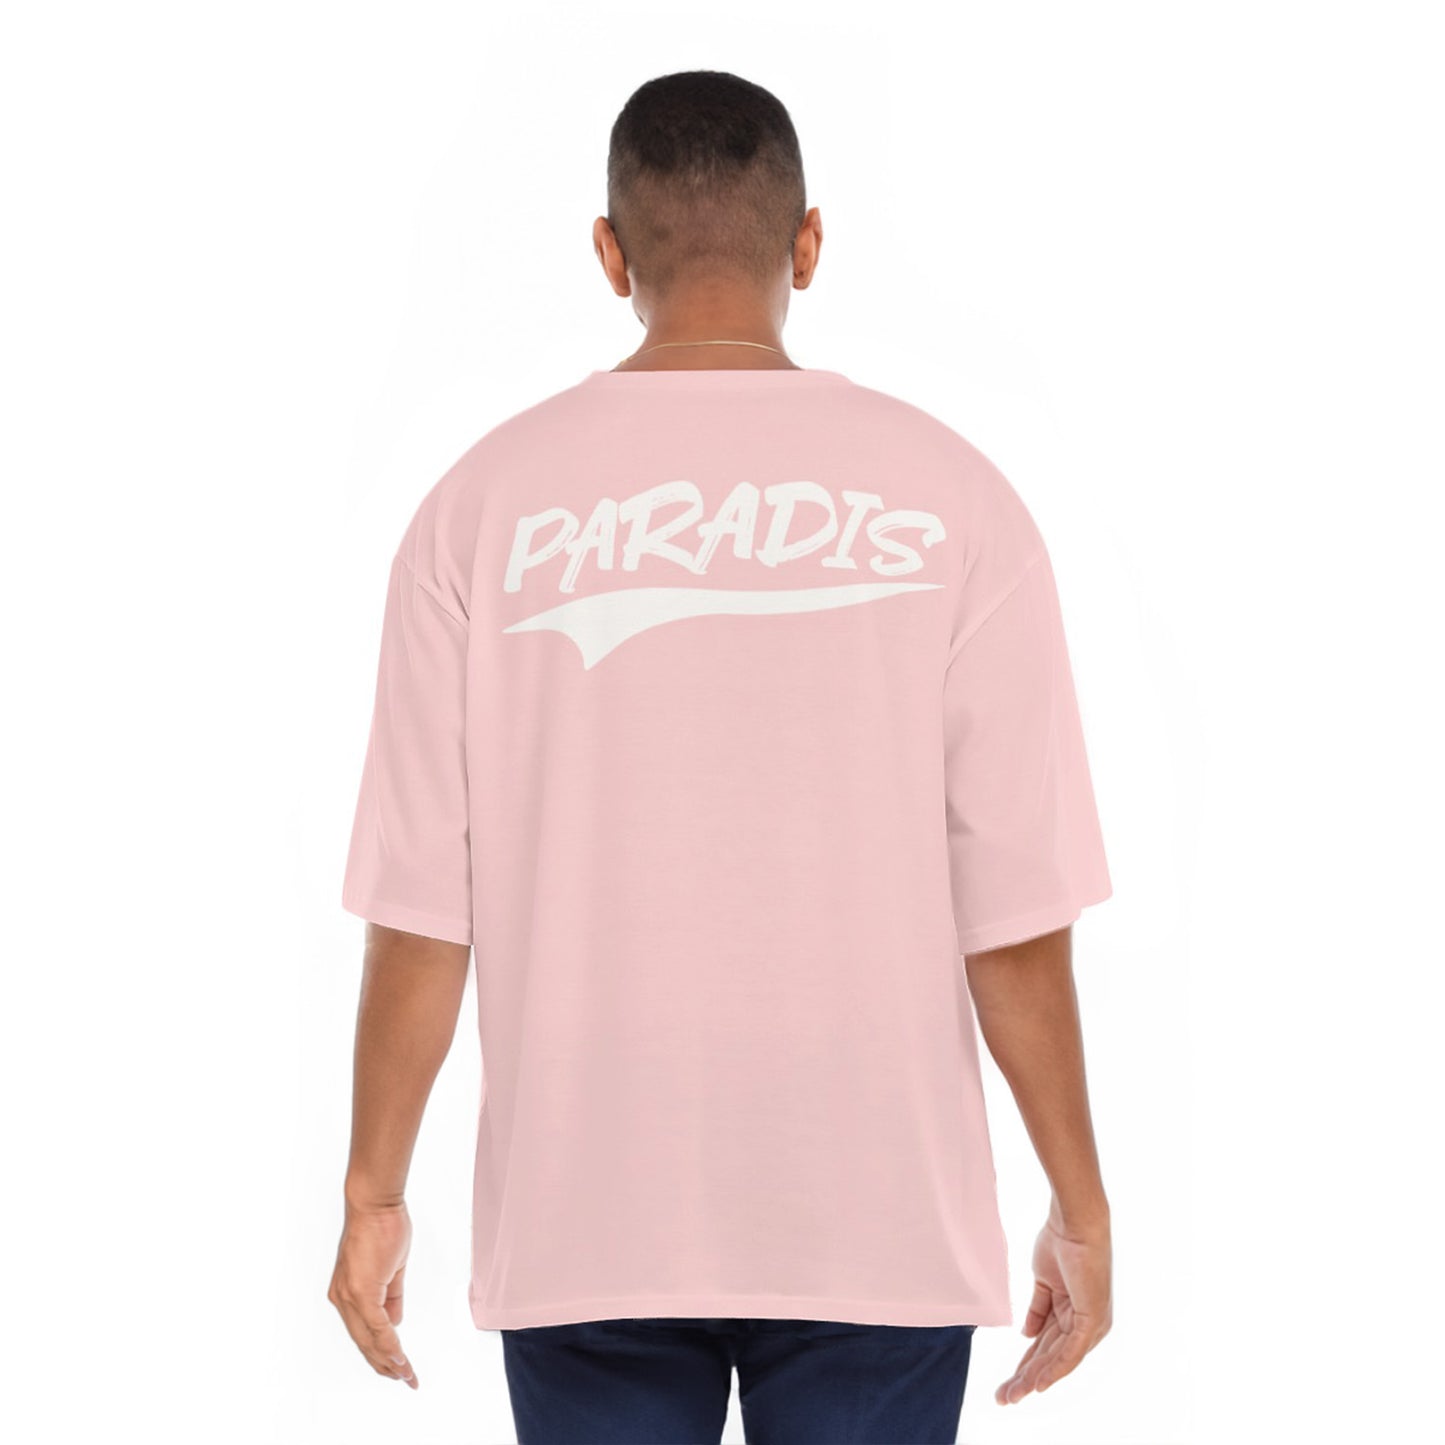 PARADIS - Pink - Oversized Tshirt | T-SHIRT | PARADIS SVP